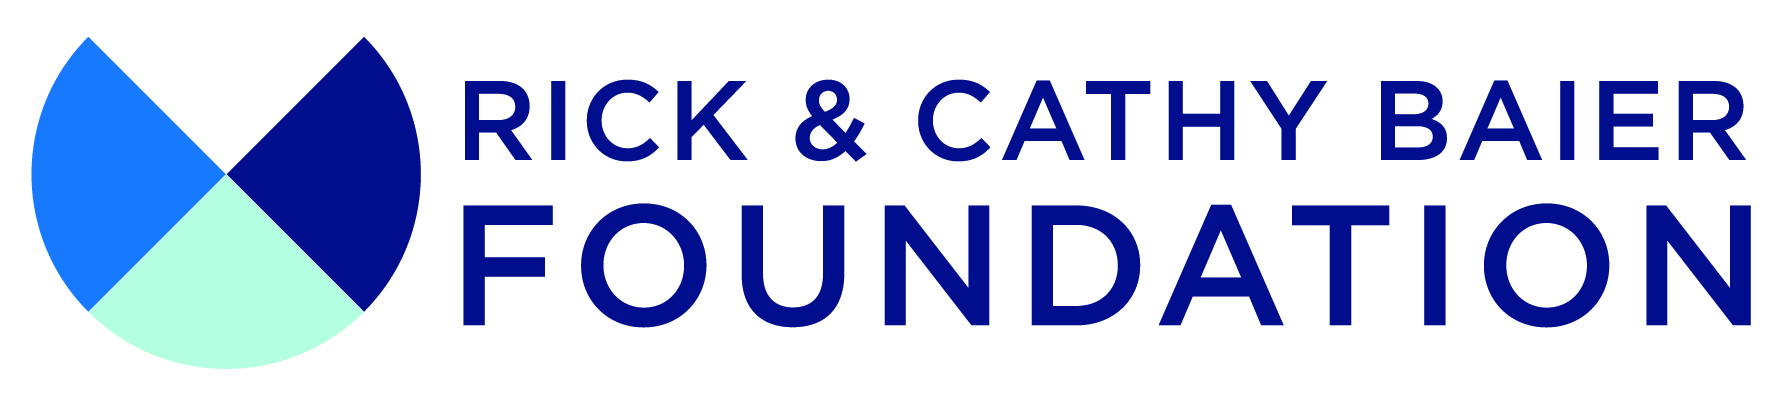 Rick & Cathy Baier Foundation